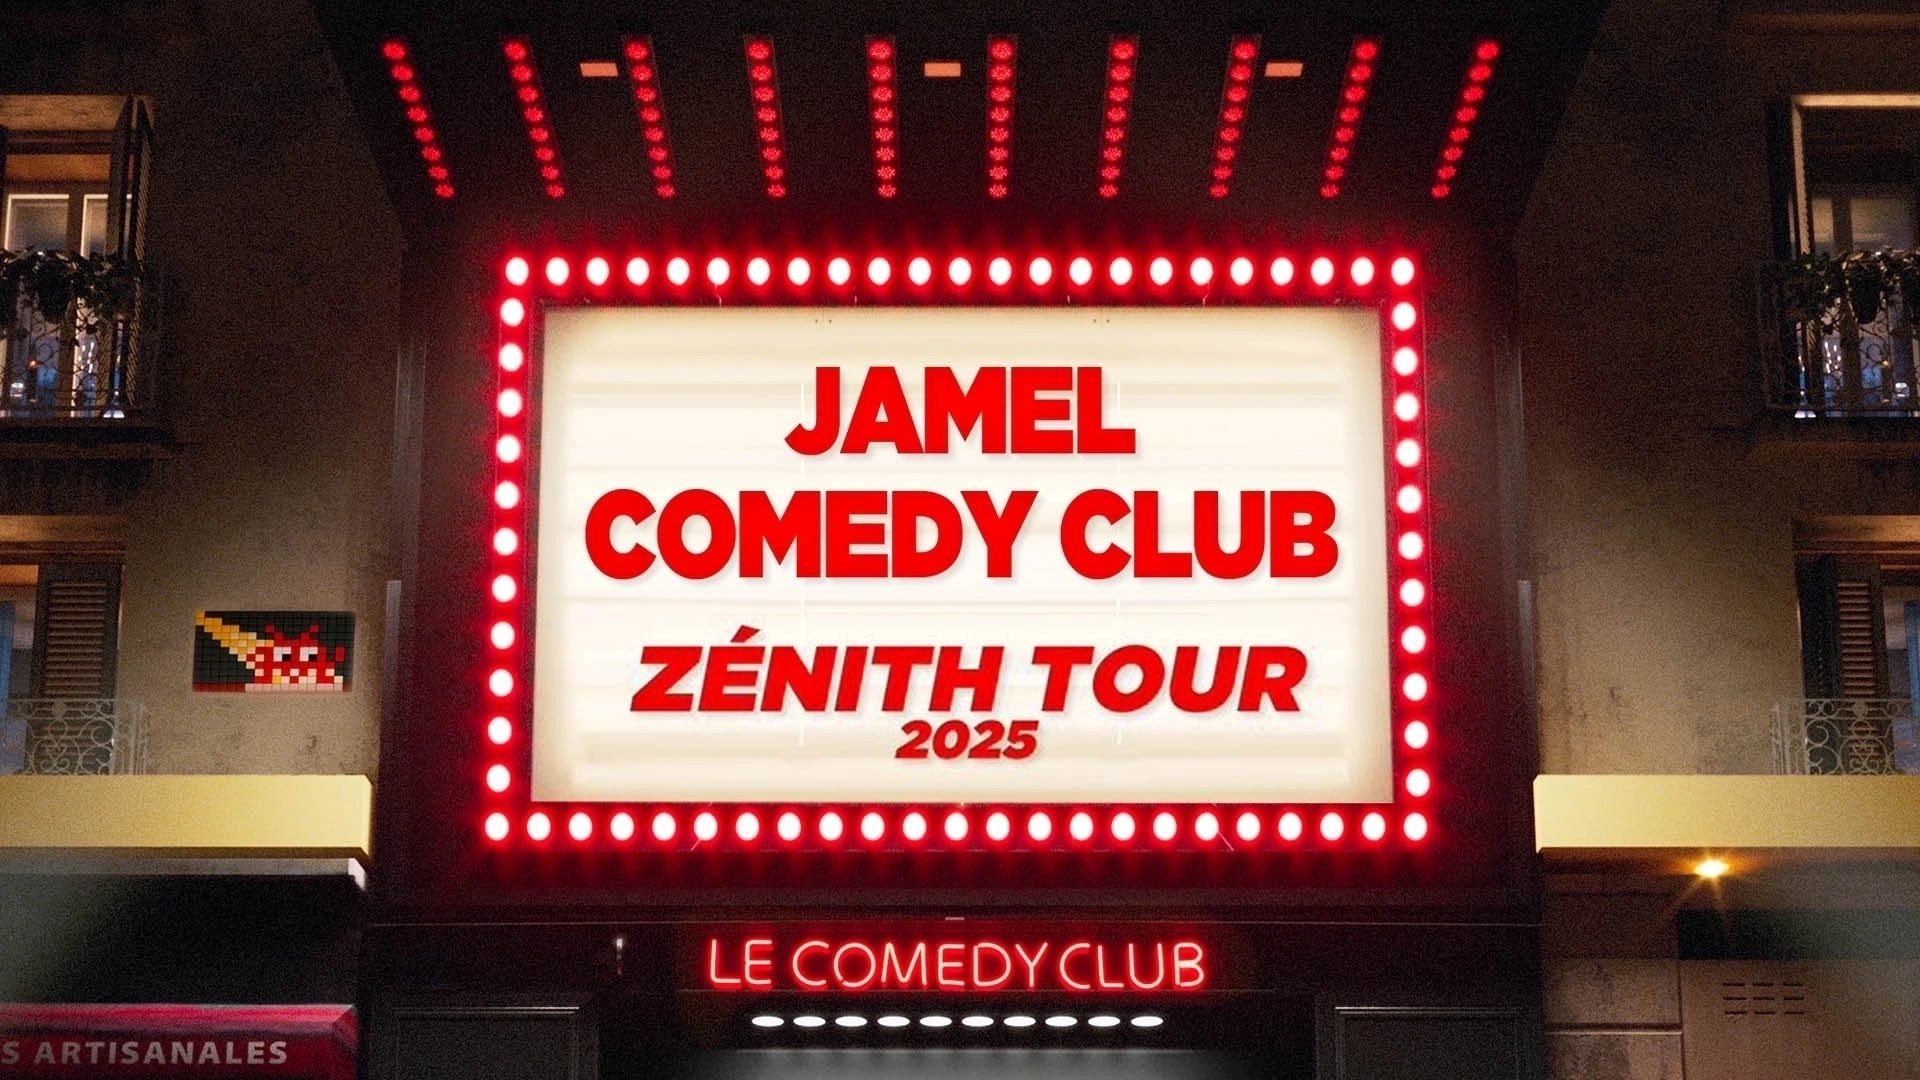 Jamel Comedy Club Zenith Tour 2025 al Forest National Tickets